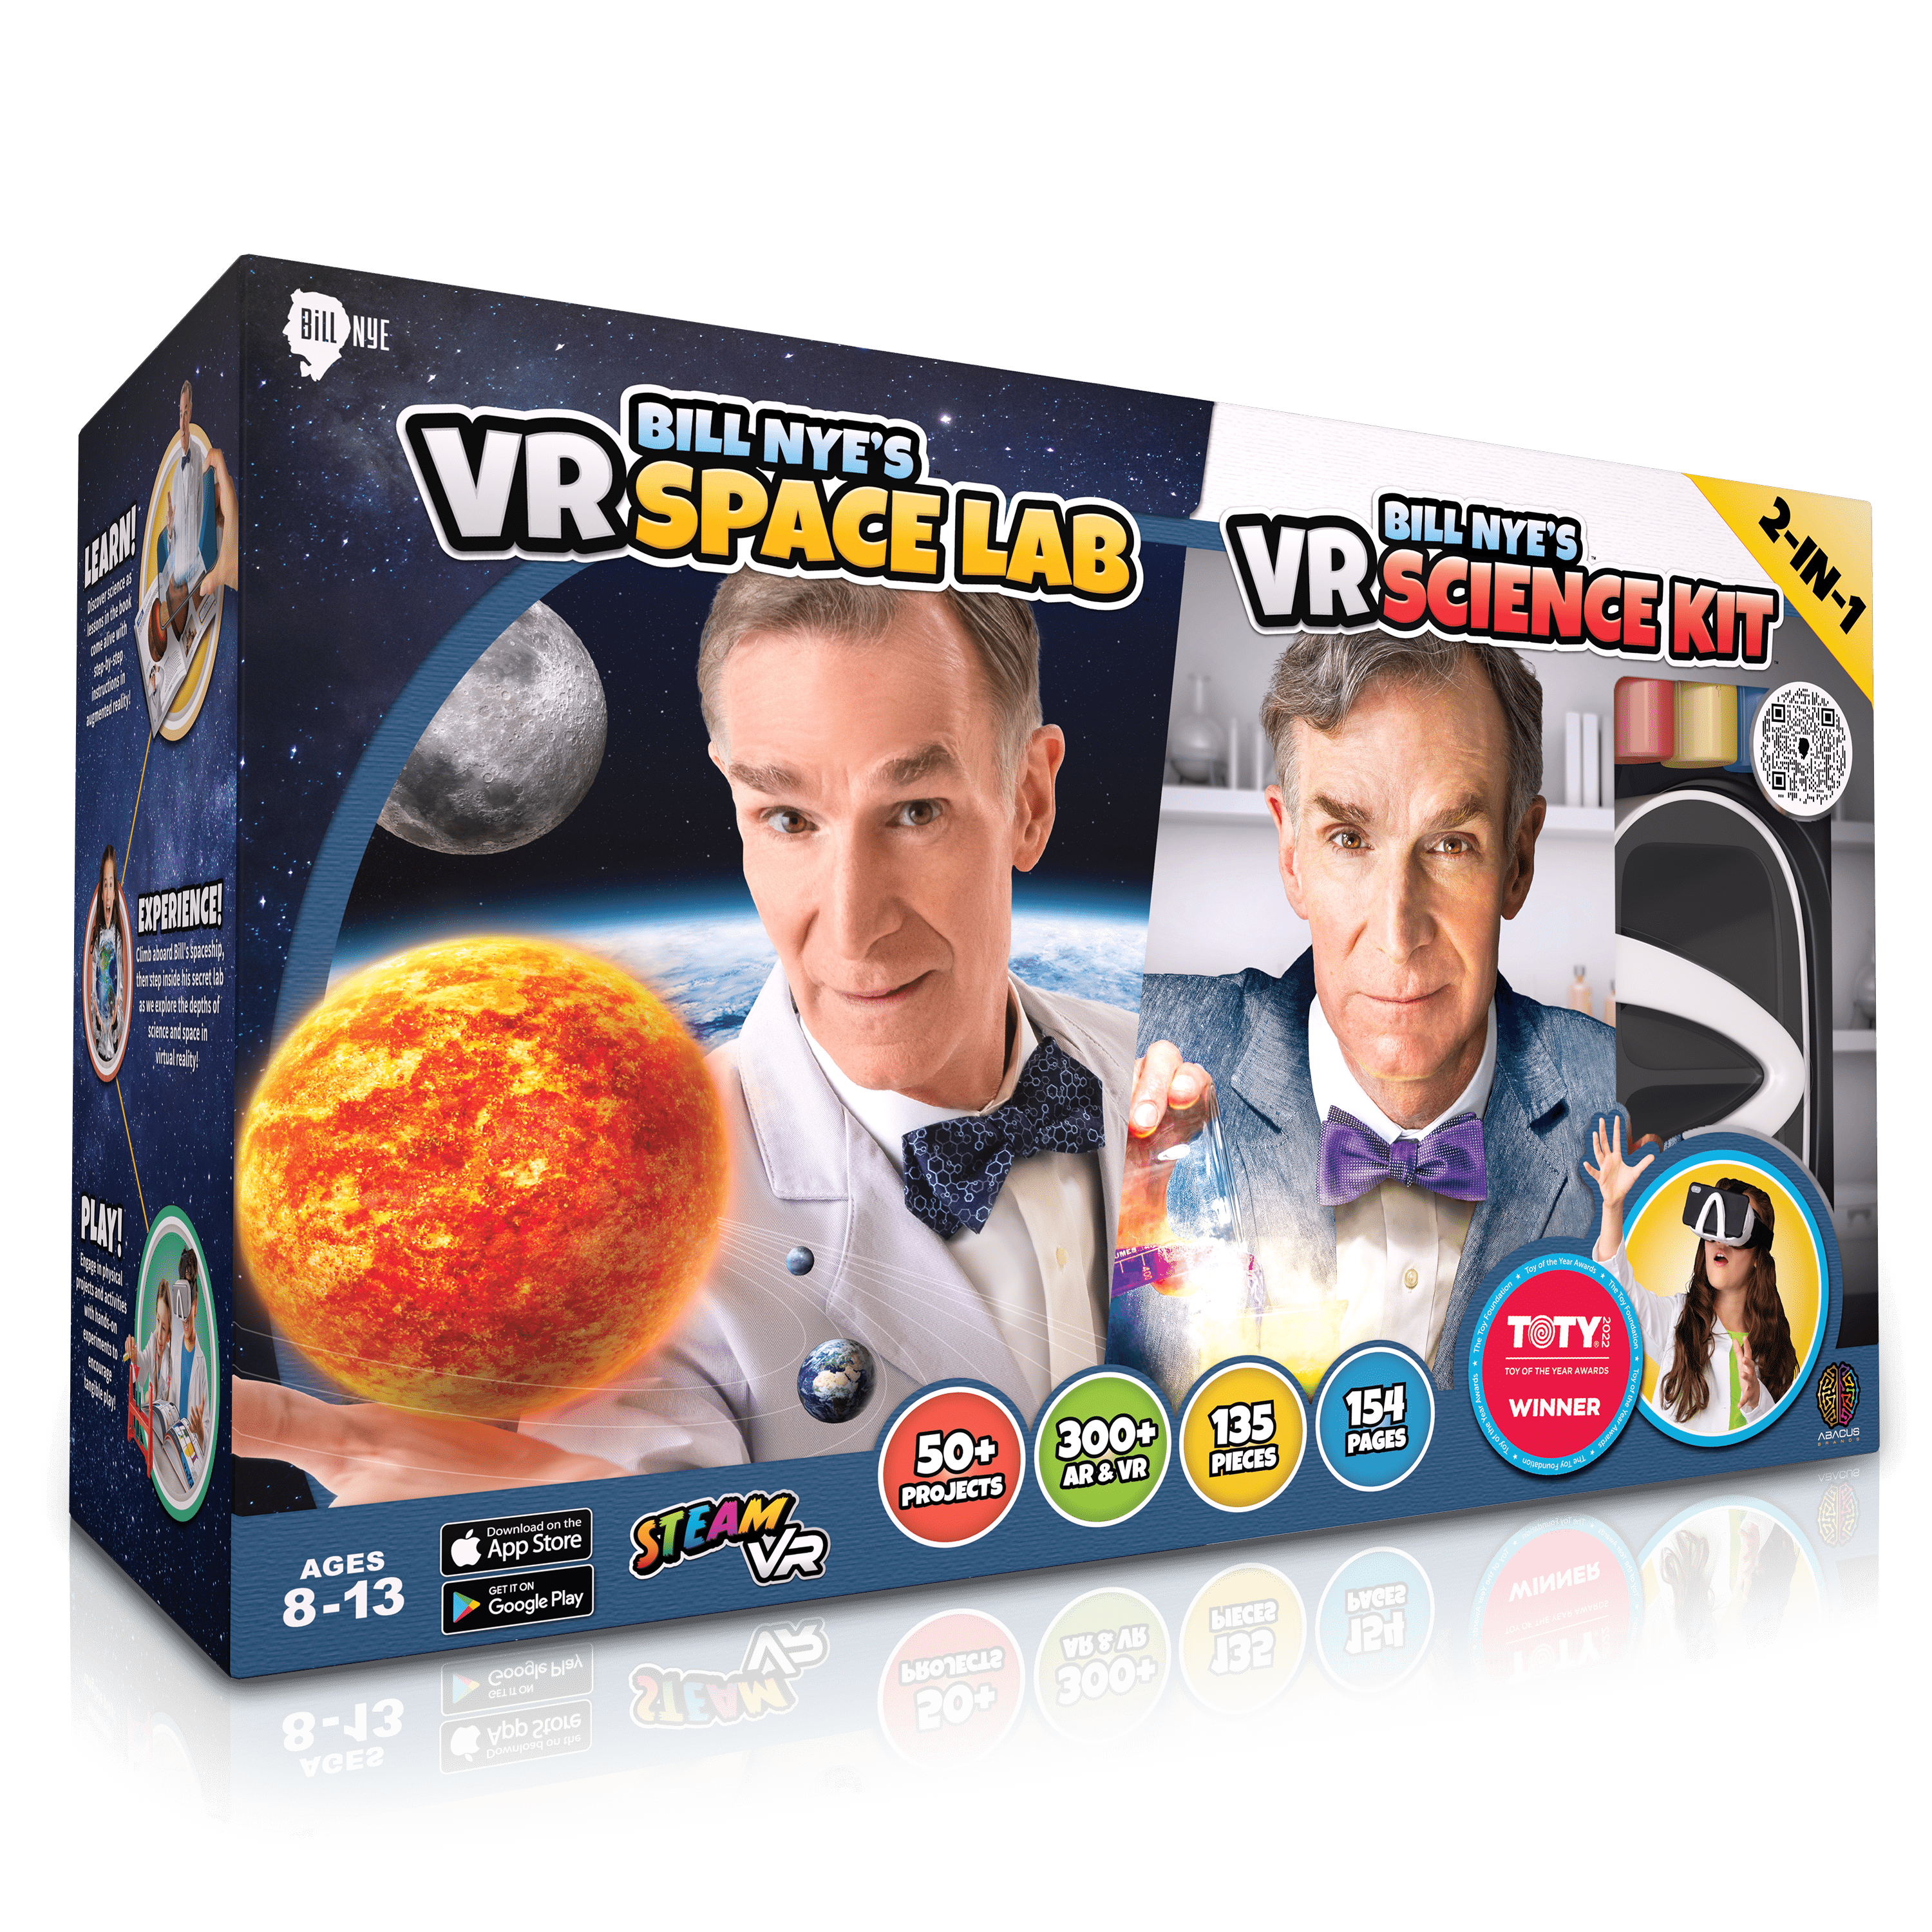 Bill Nye's Virtual Reality 2 in 1 Bundle Pack - VR Space Lab & Science Kit